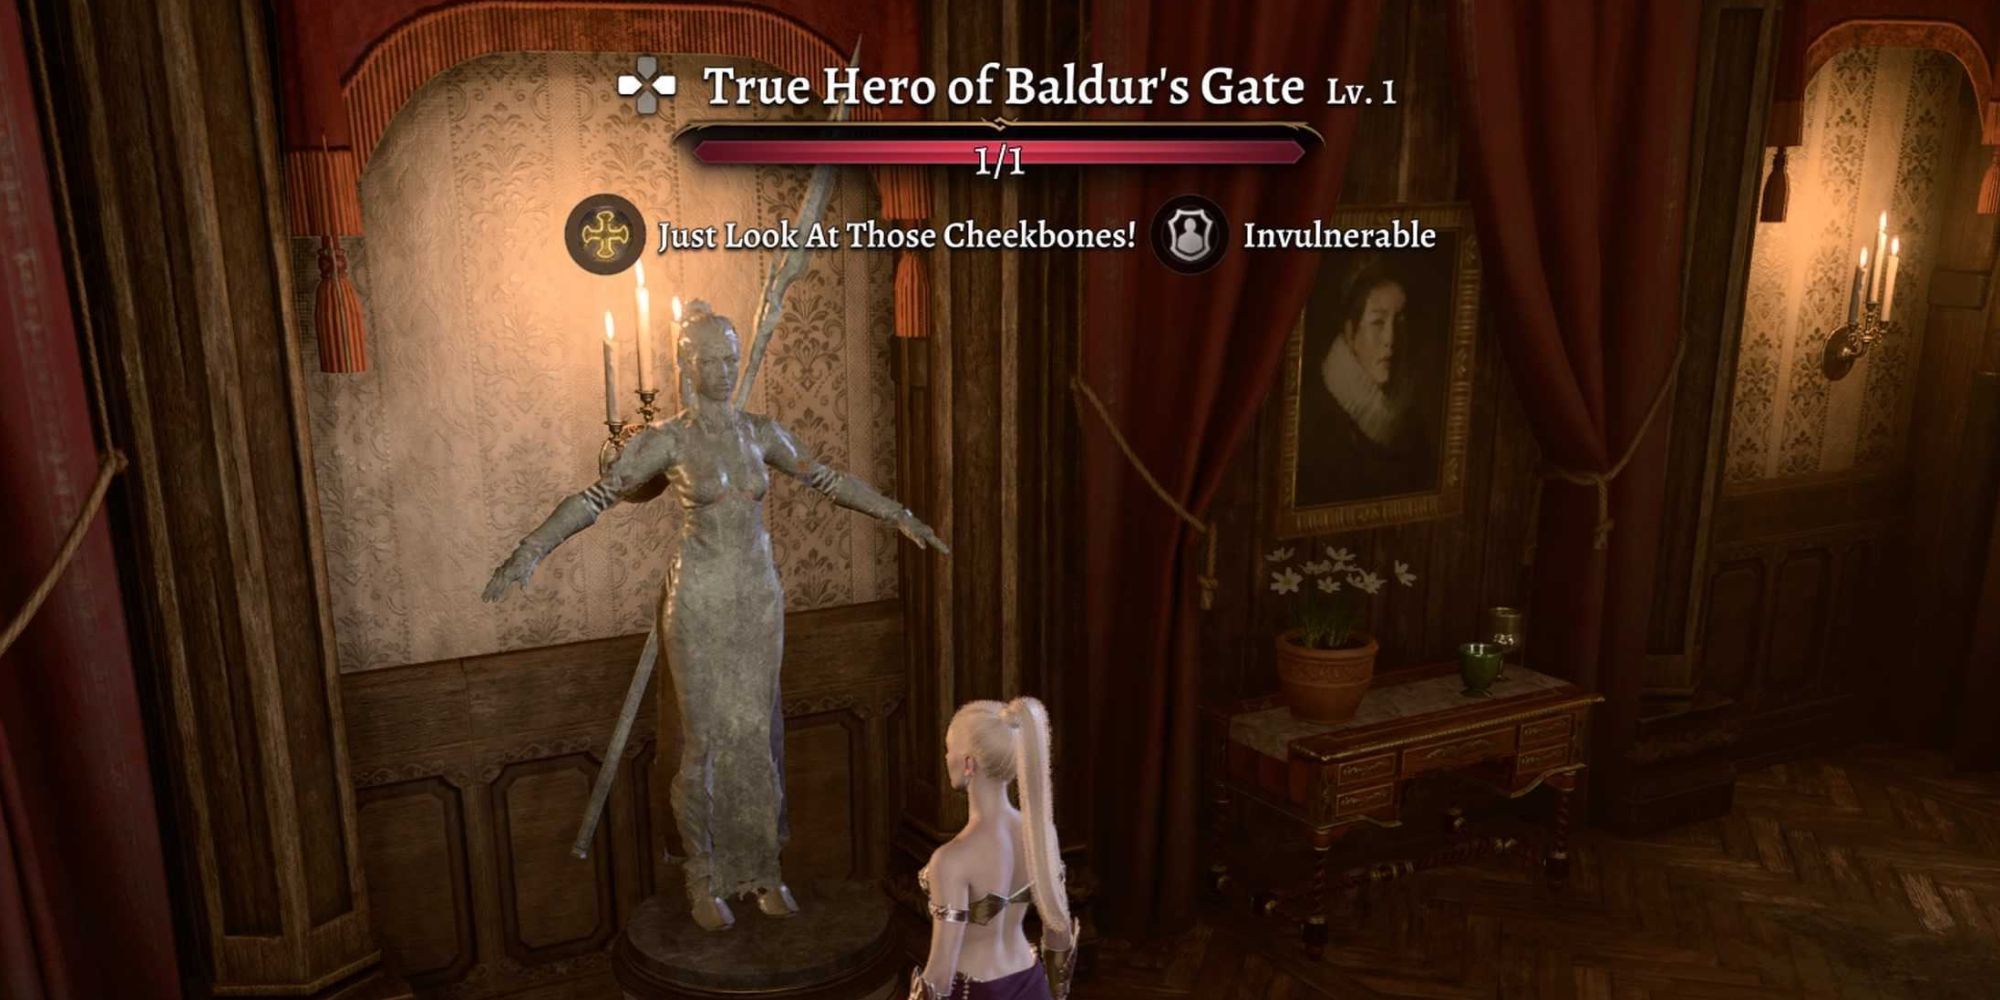 Baldur's Gate 3 Players Say Act 3 Is 